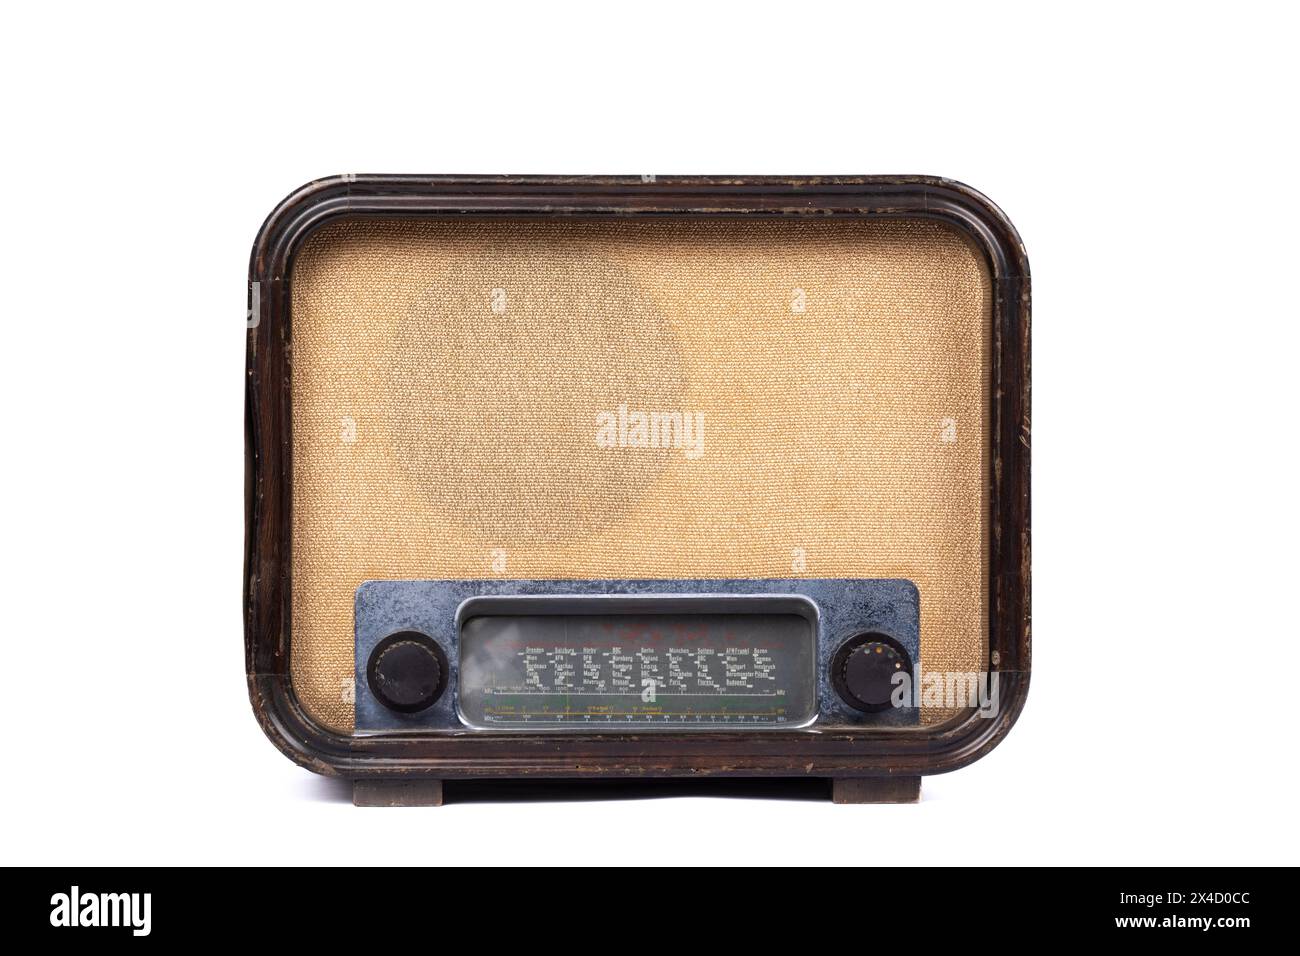 Vintage German World War II Era Radio on White Background - Antique Communication Device Stock Photo